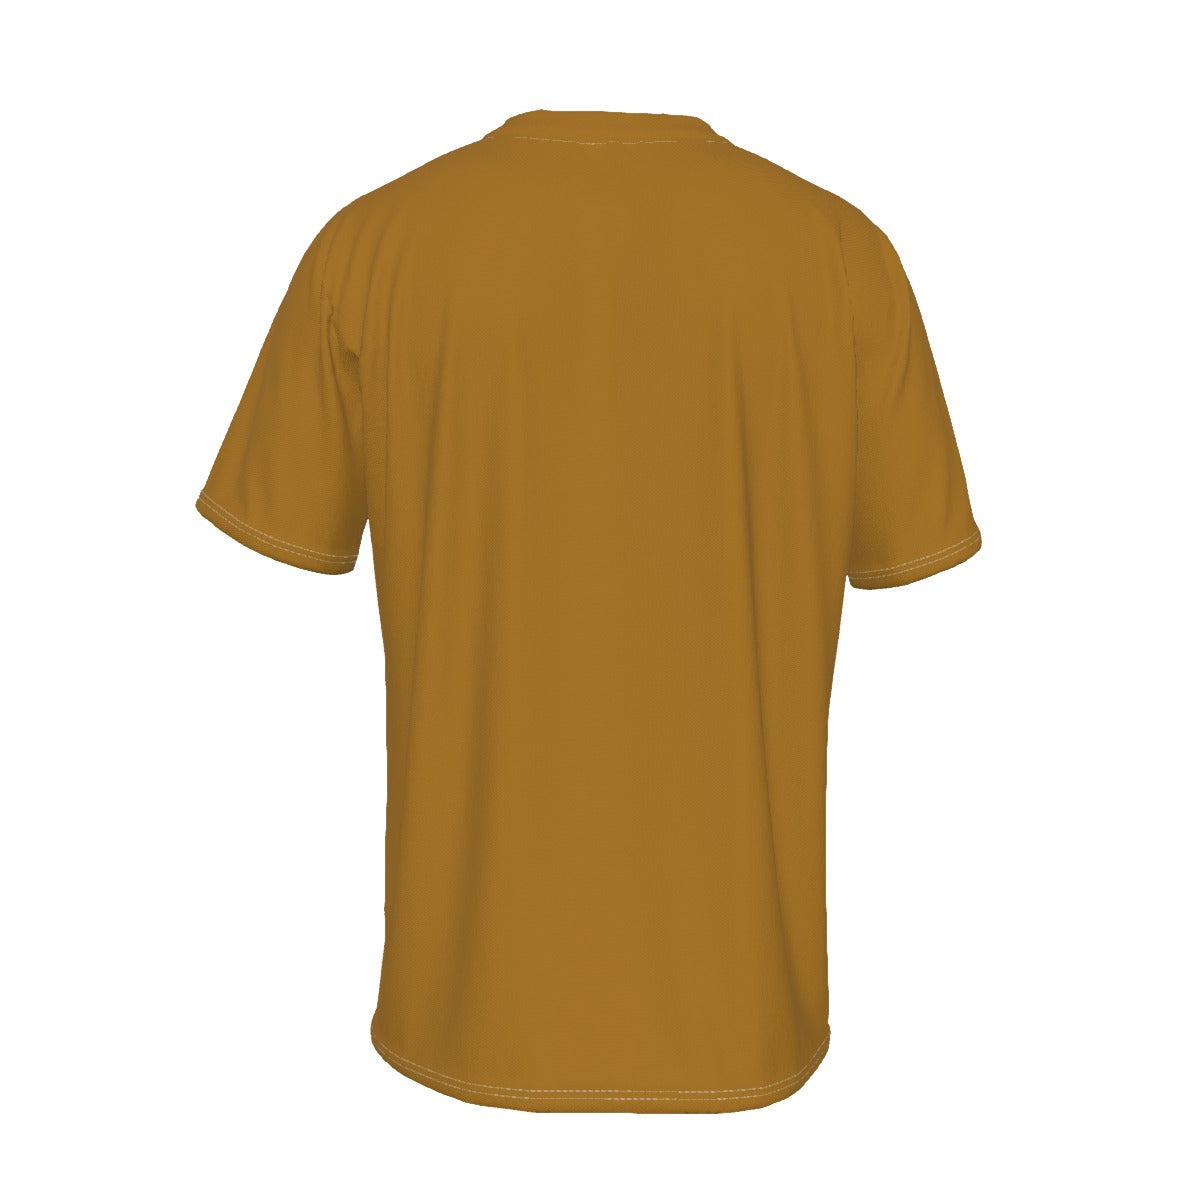 All-Over Print Men's Short Sleeve T-shirt with Neckline Tie